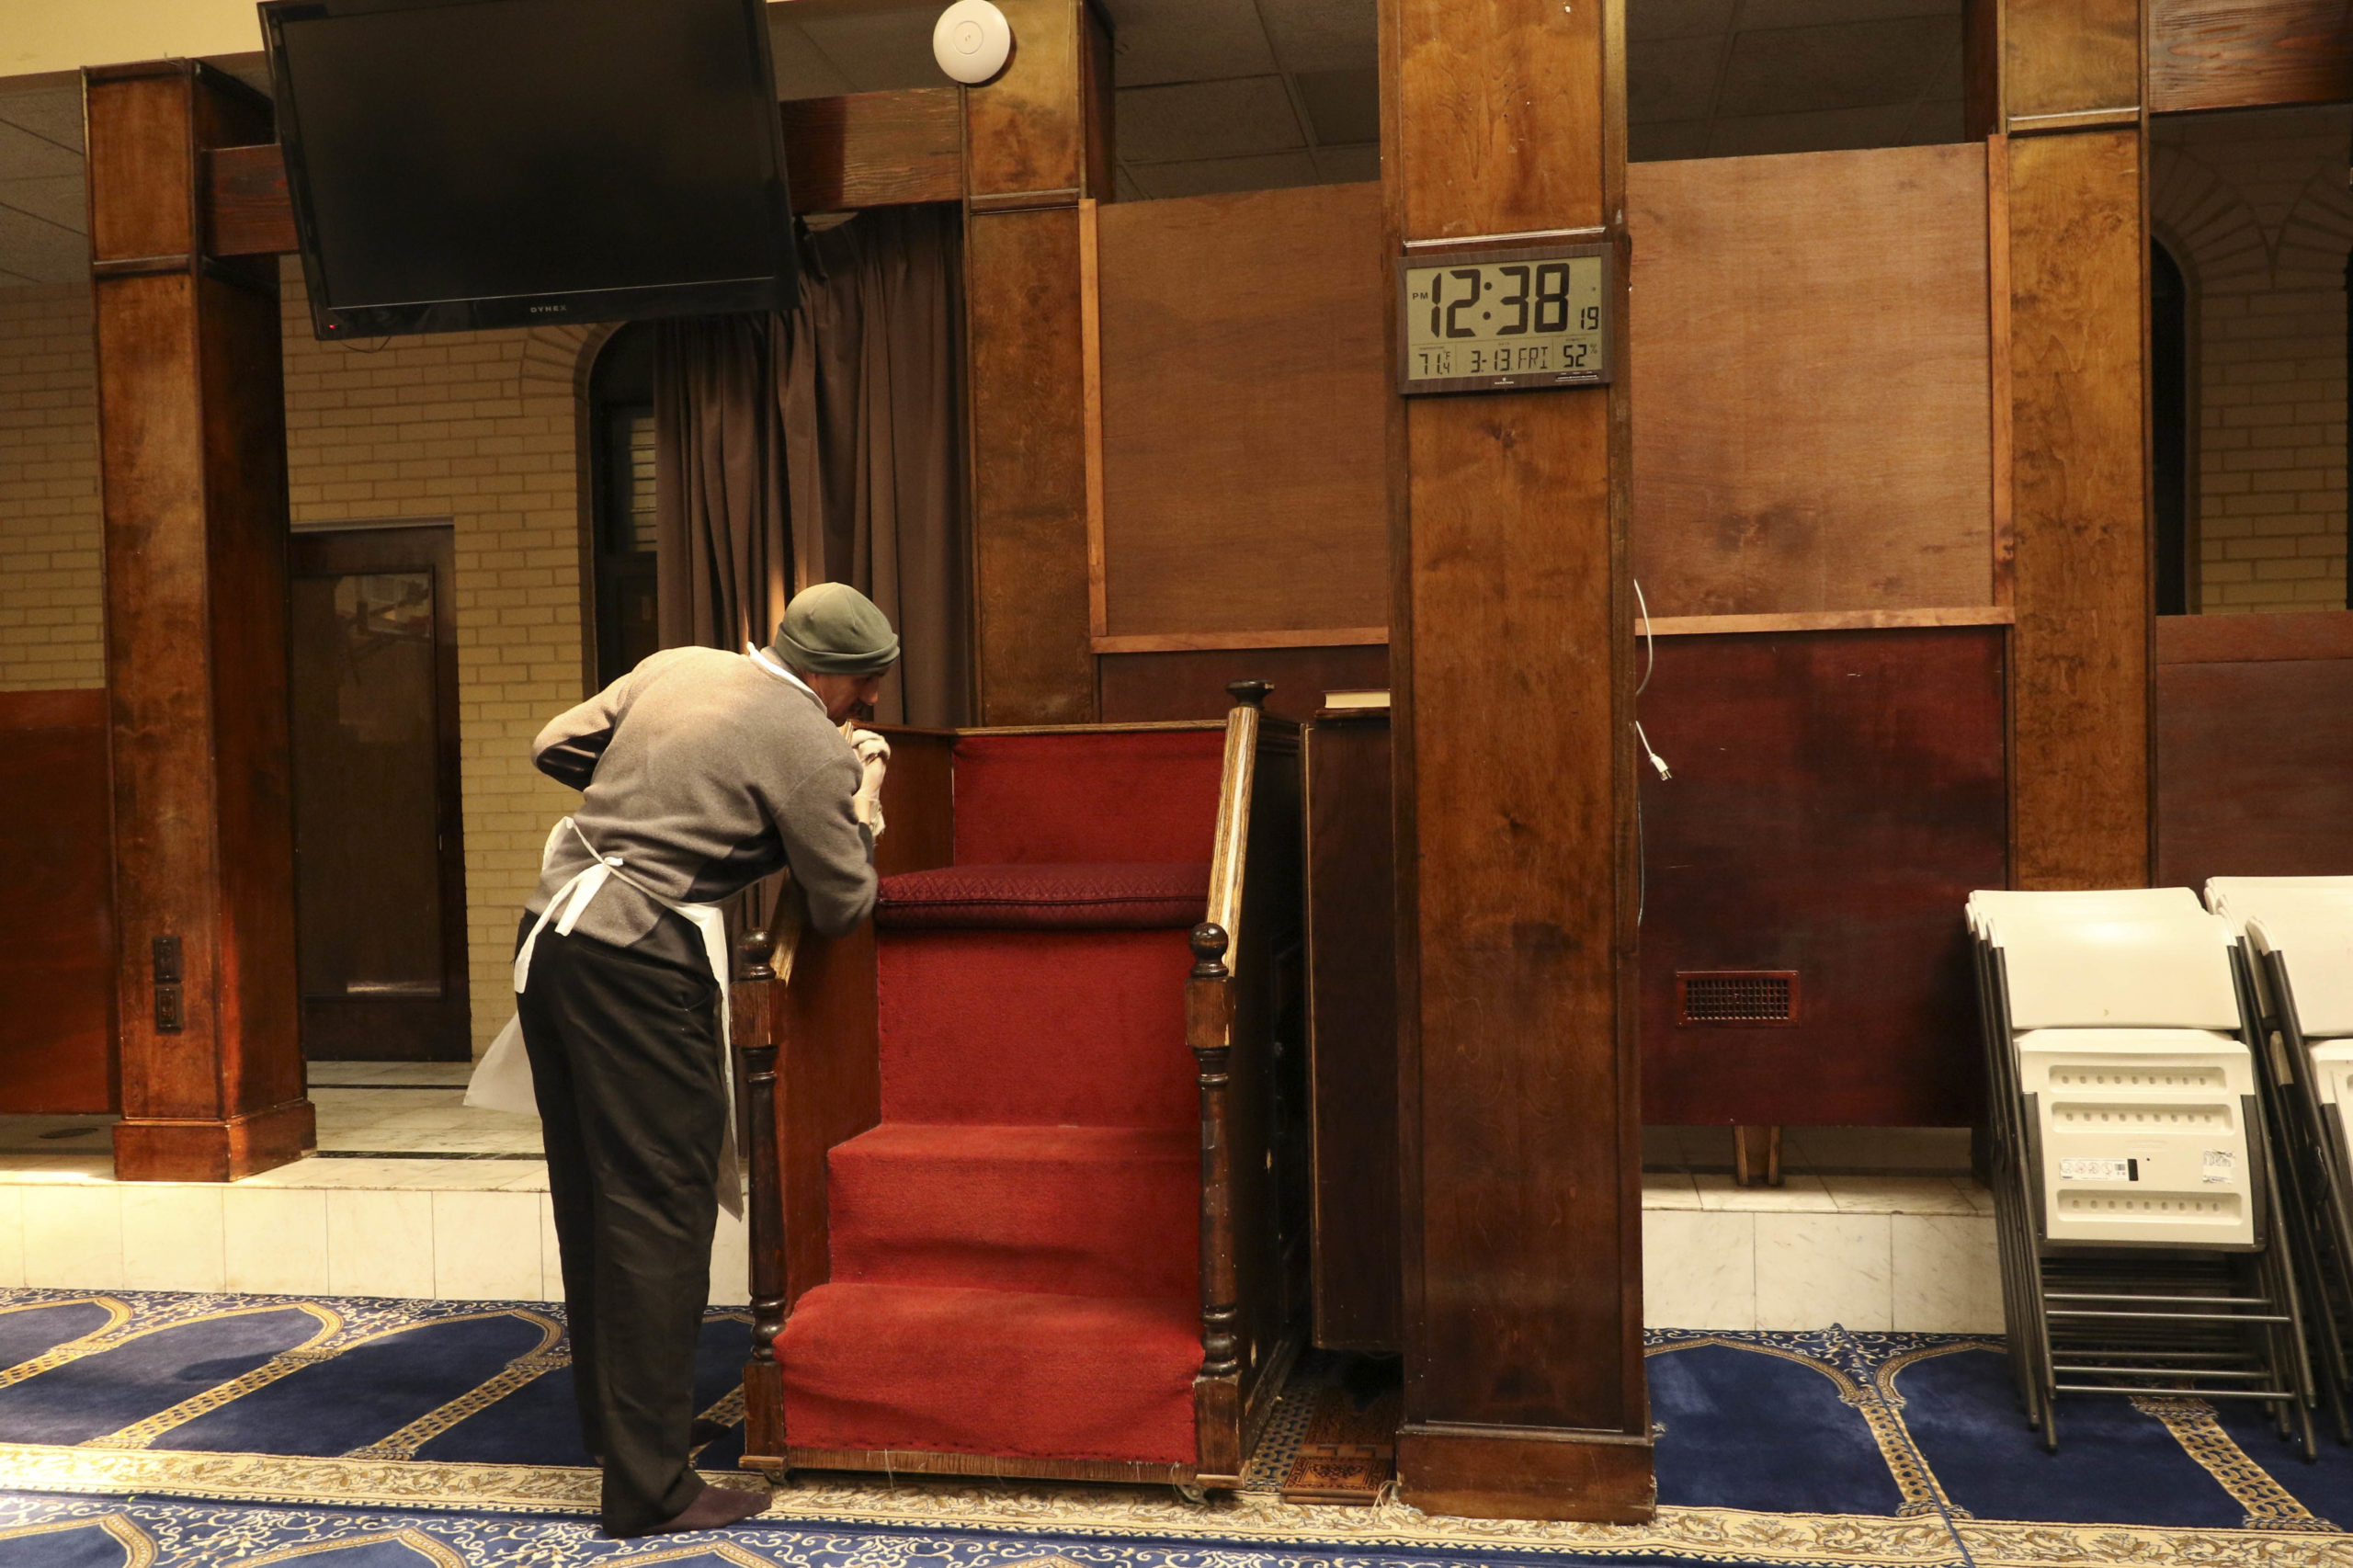 Coronavirus: US Mosques Cancel Friday Prayers, Cite Responsibility to Save Lives